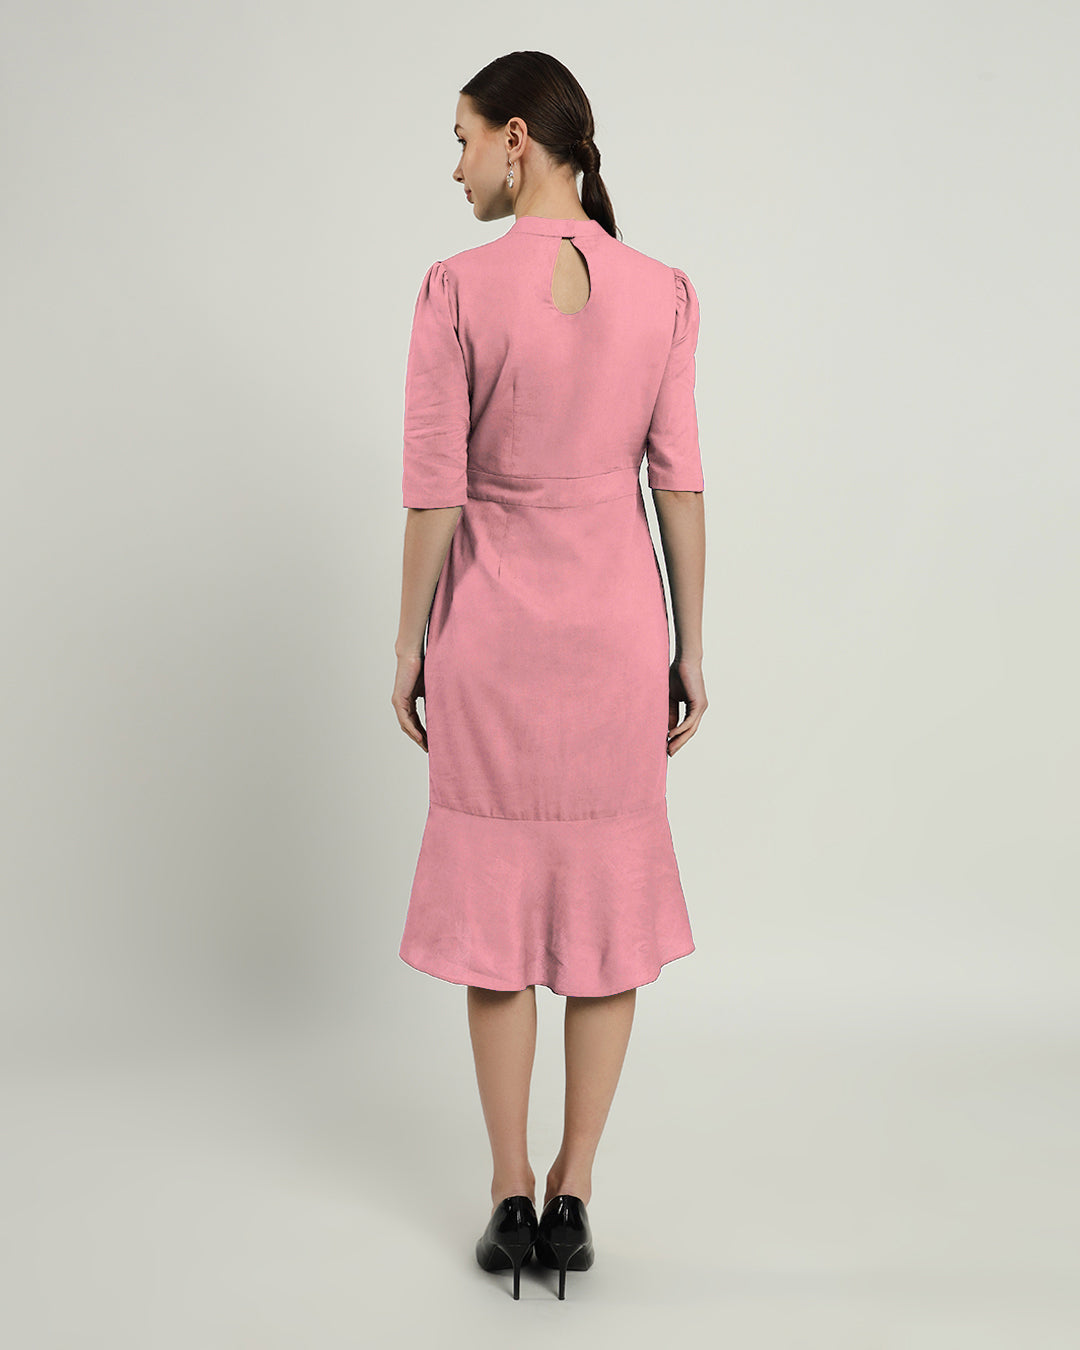 The Charlotte Fondant Pink Cotton Dress